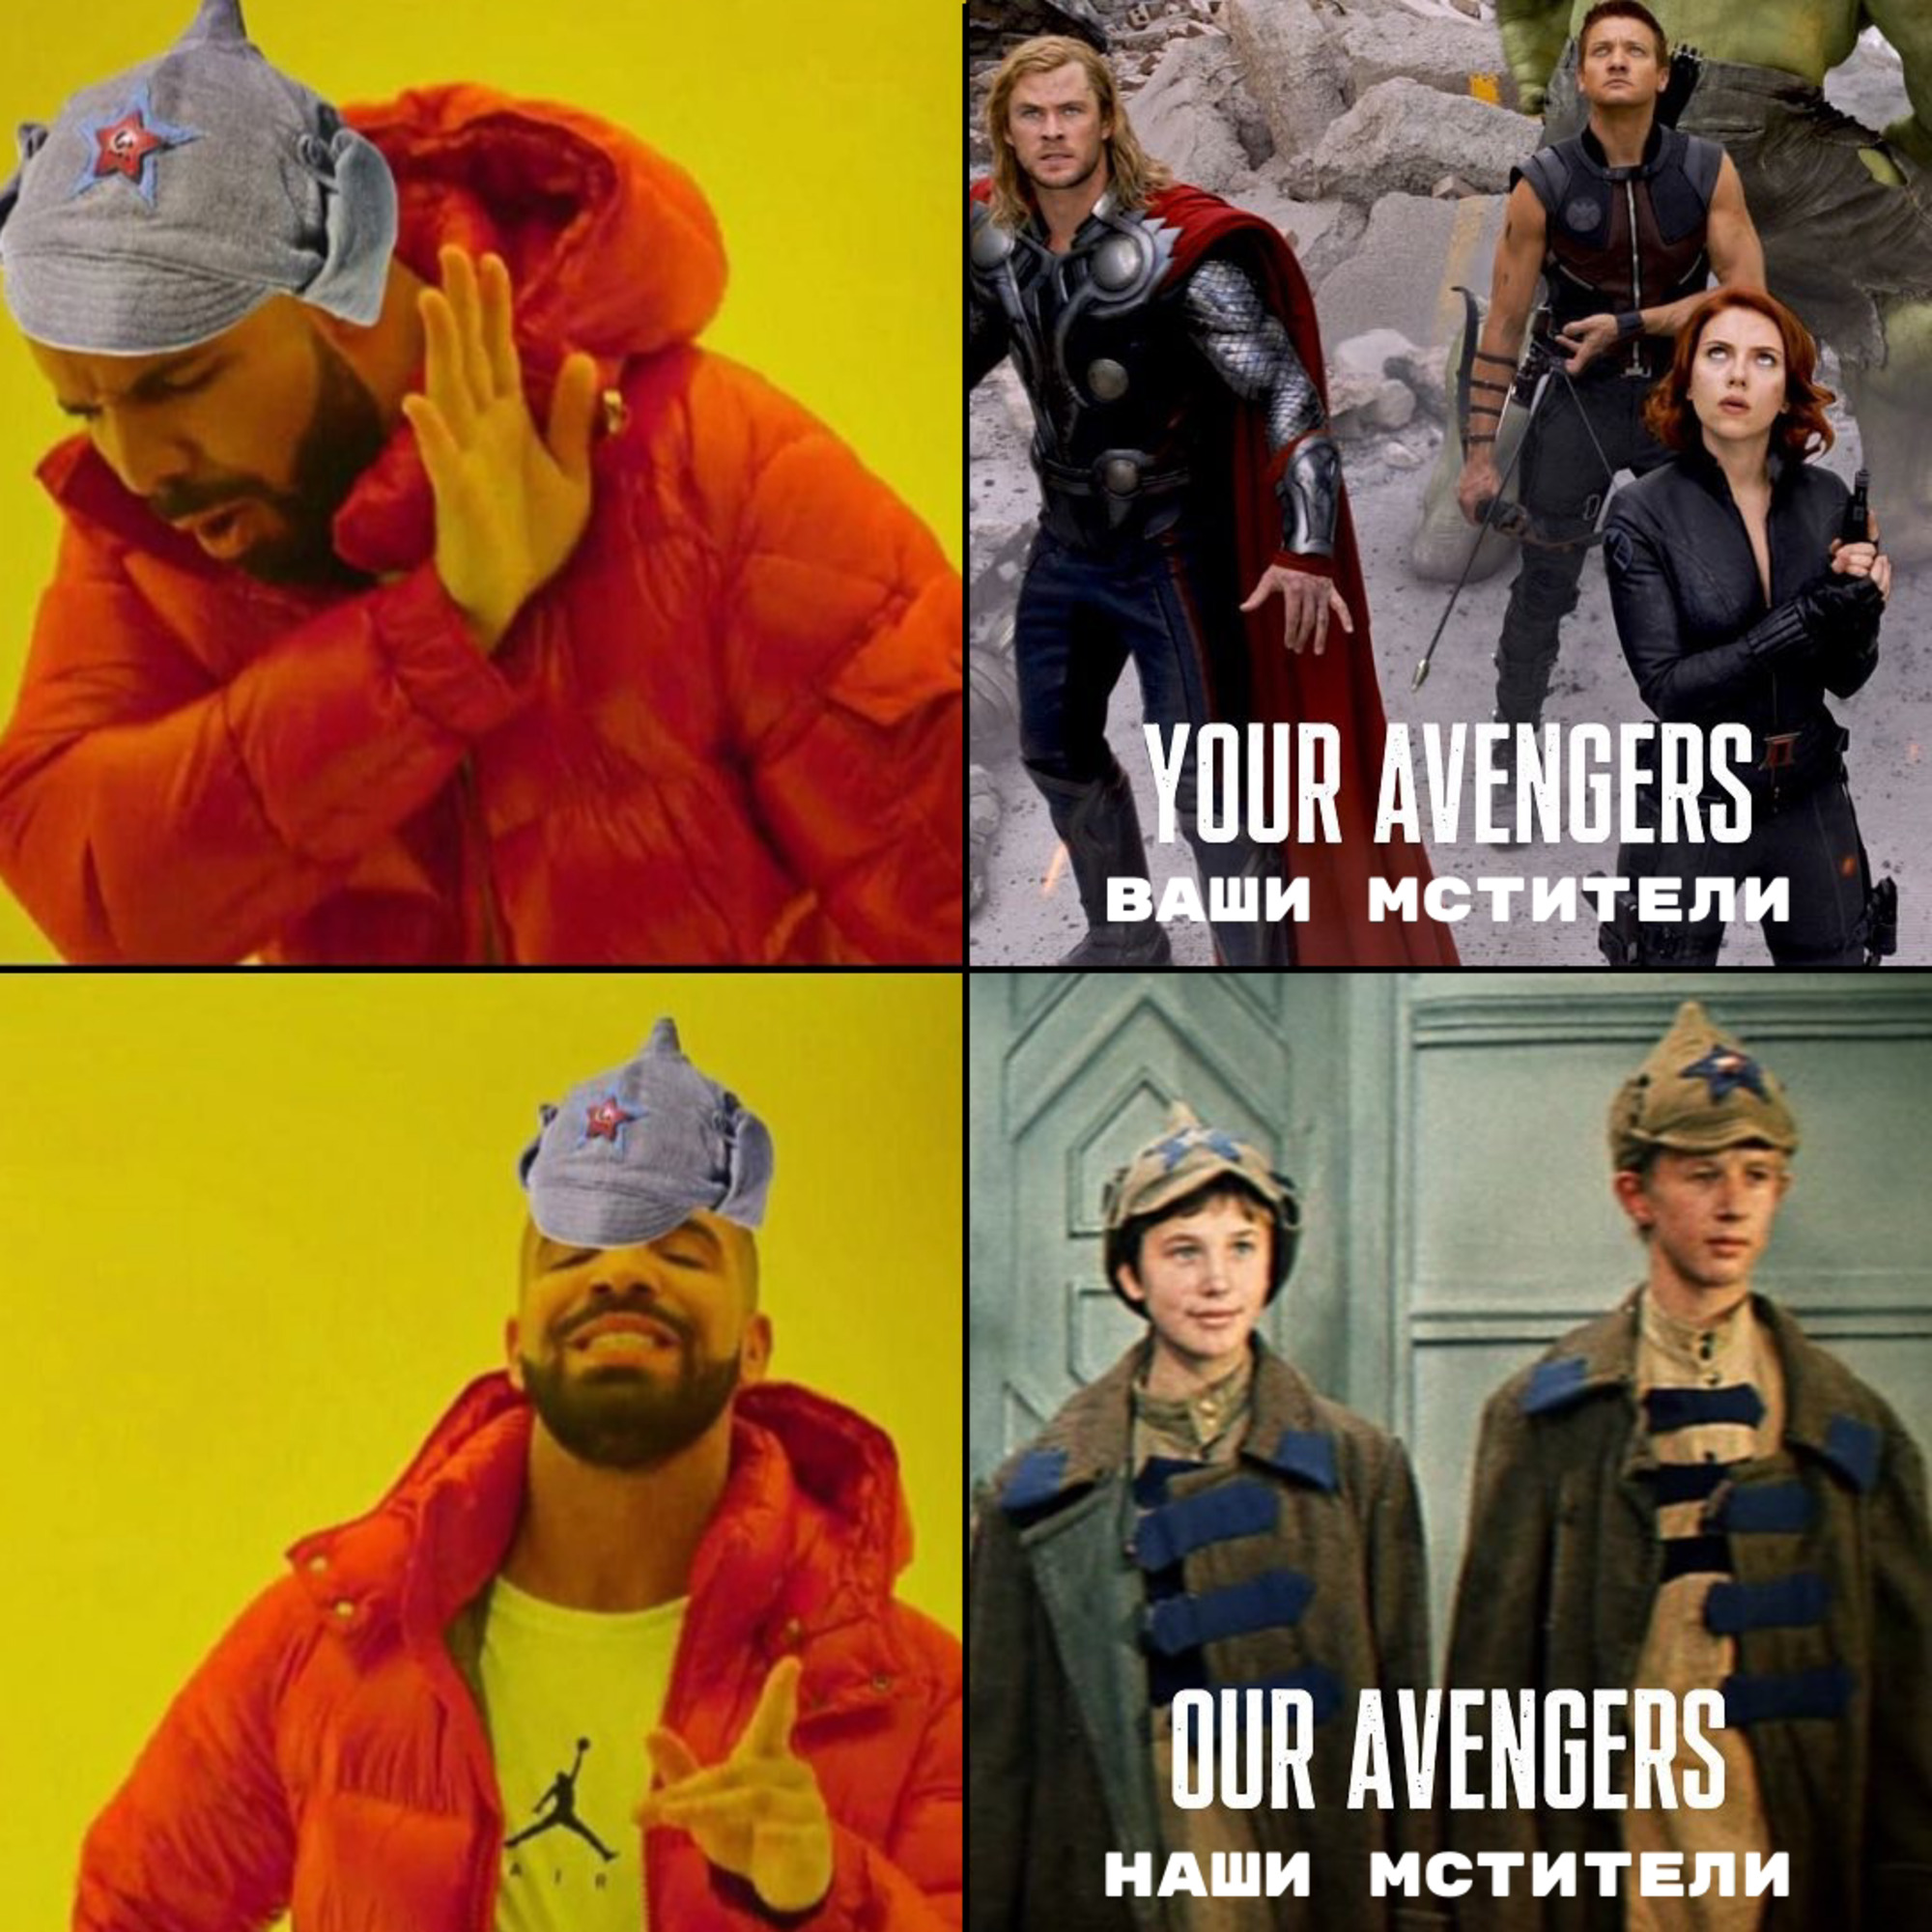 Your Avengers vs. Our Avengers